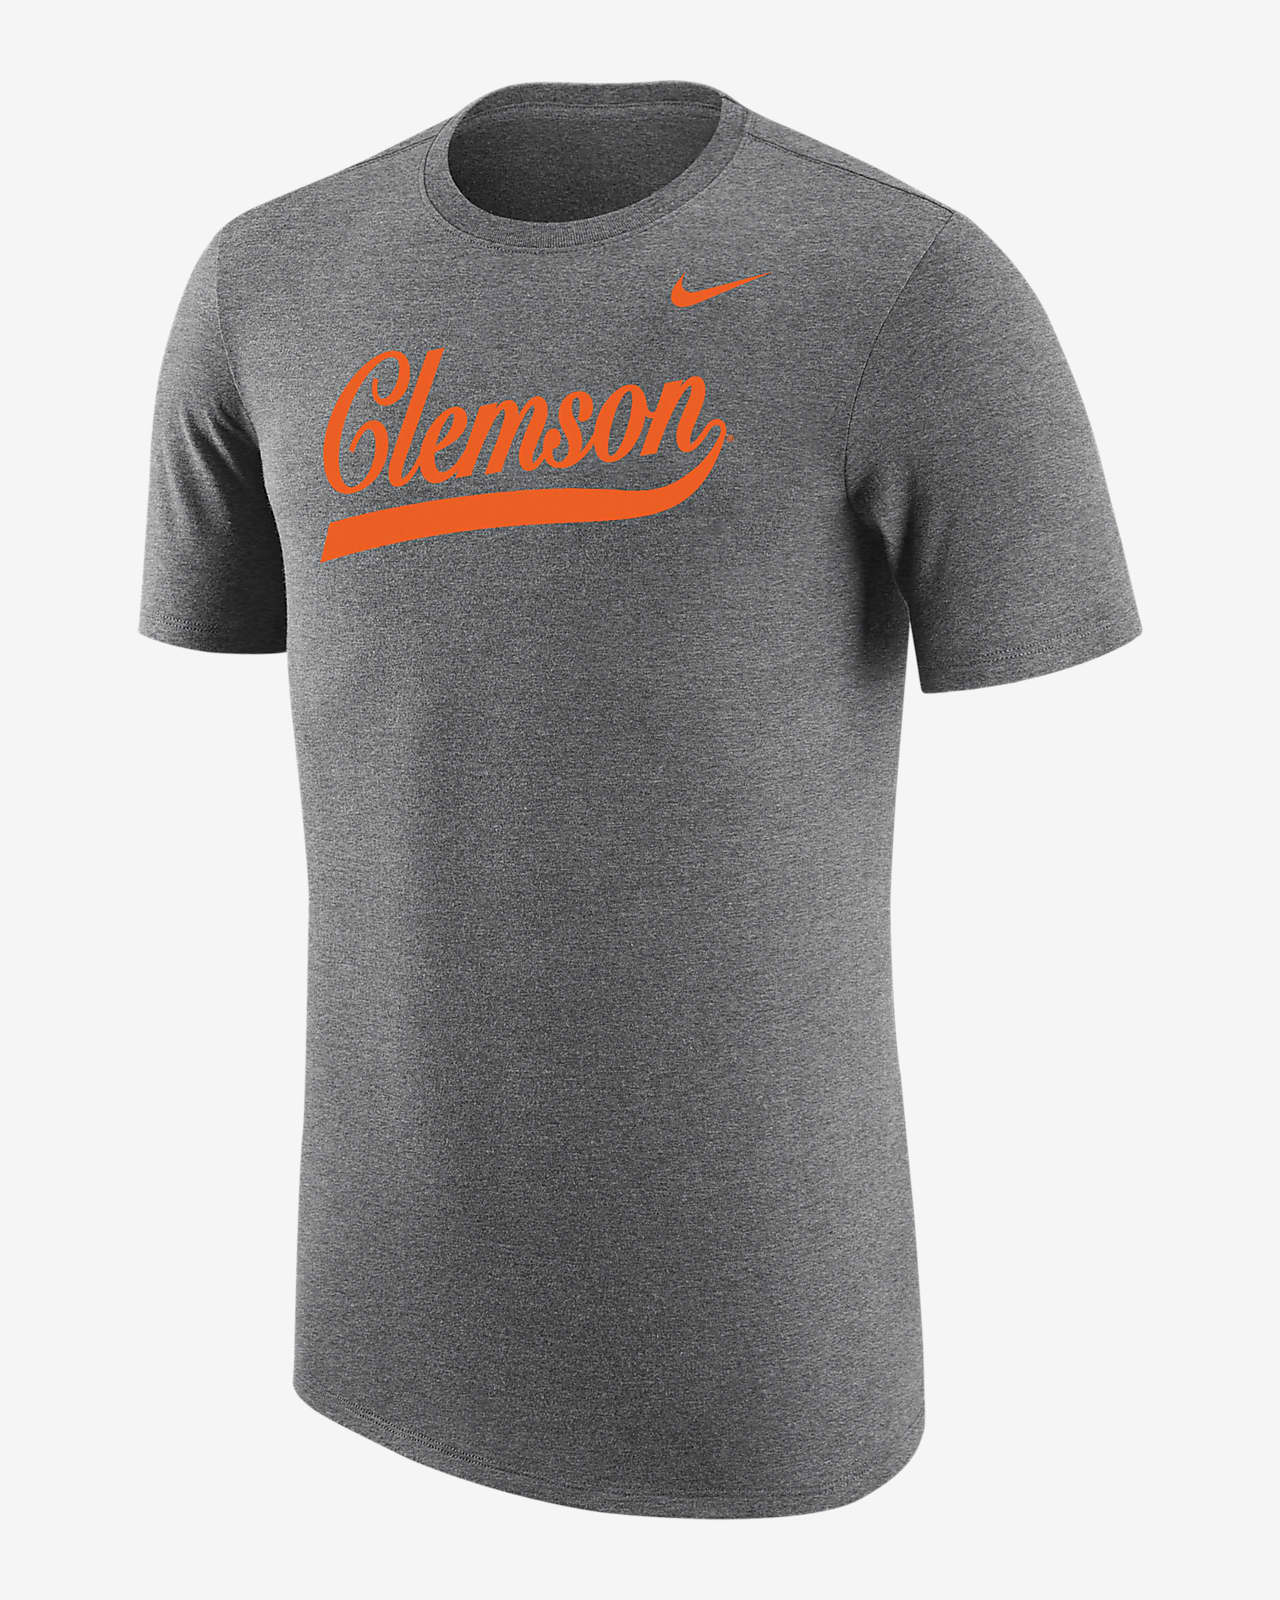 Clemson Men's Nike College T-Shirt. Nike.com